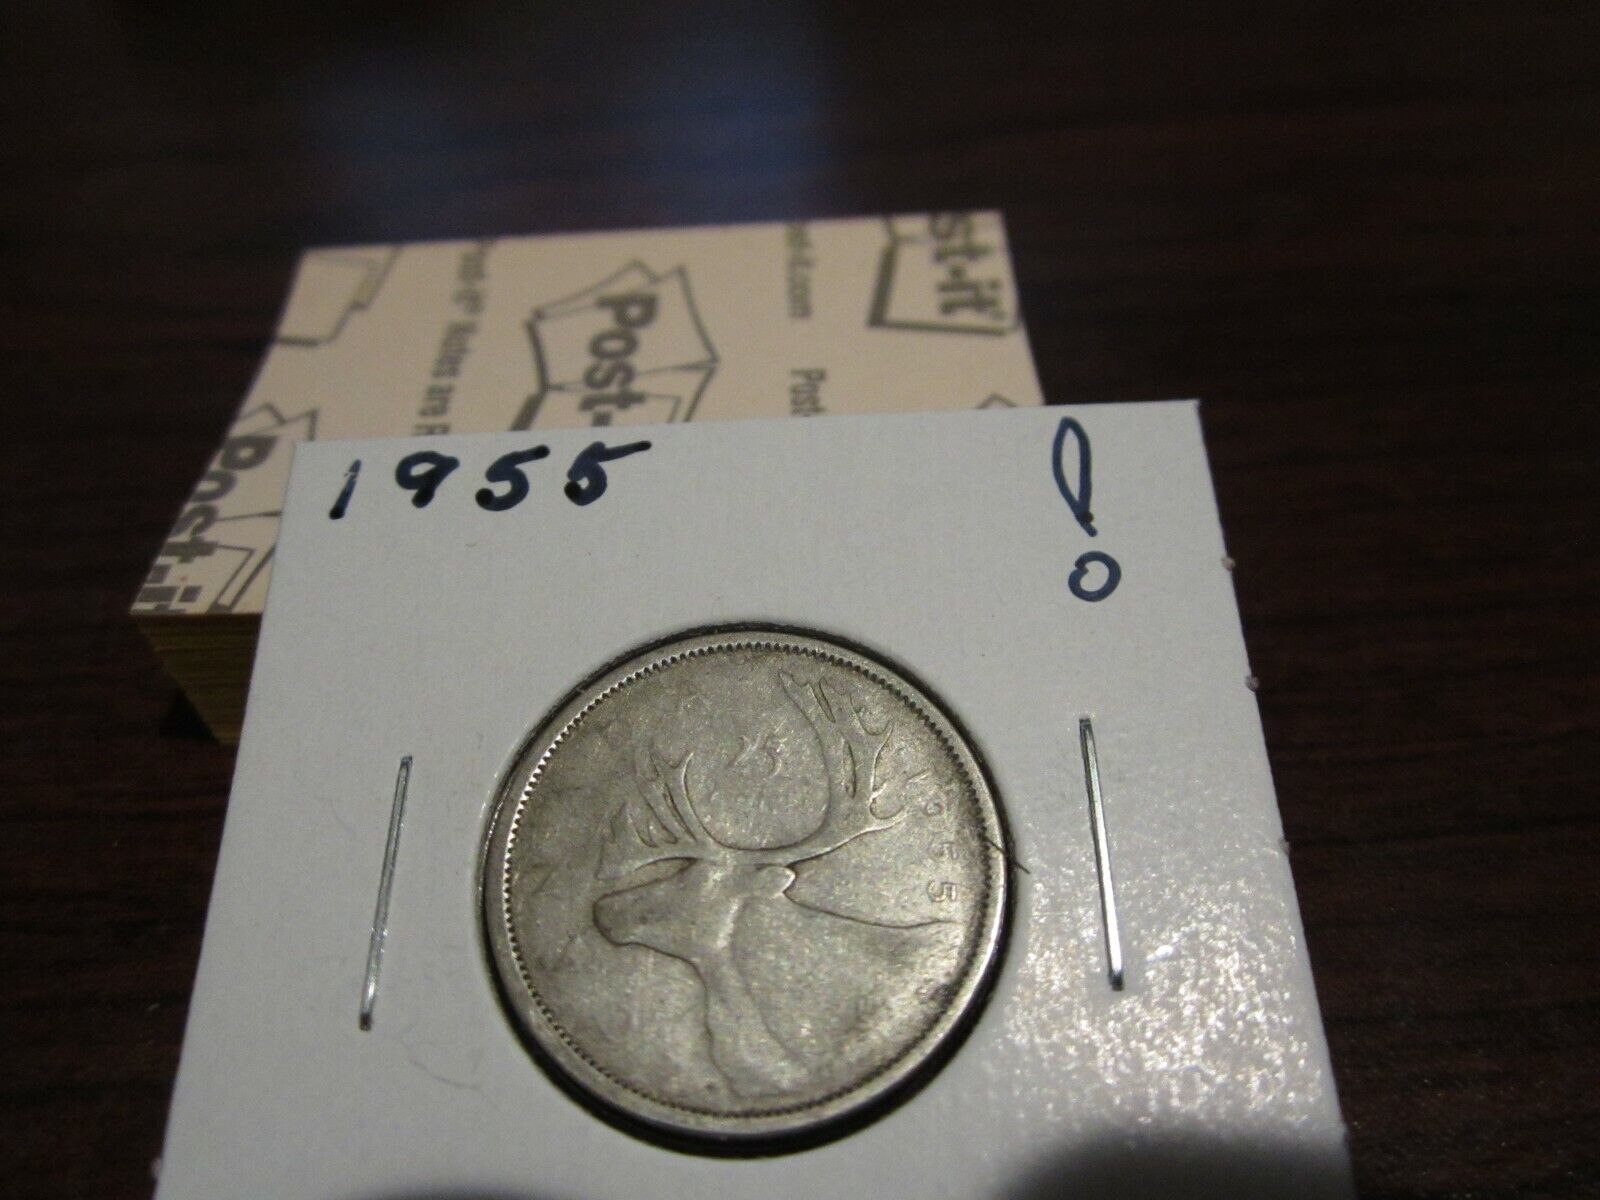 1955 - Canada - 25 cent coin - silver Canadian quarter